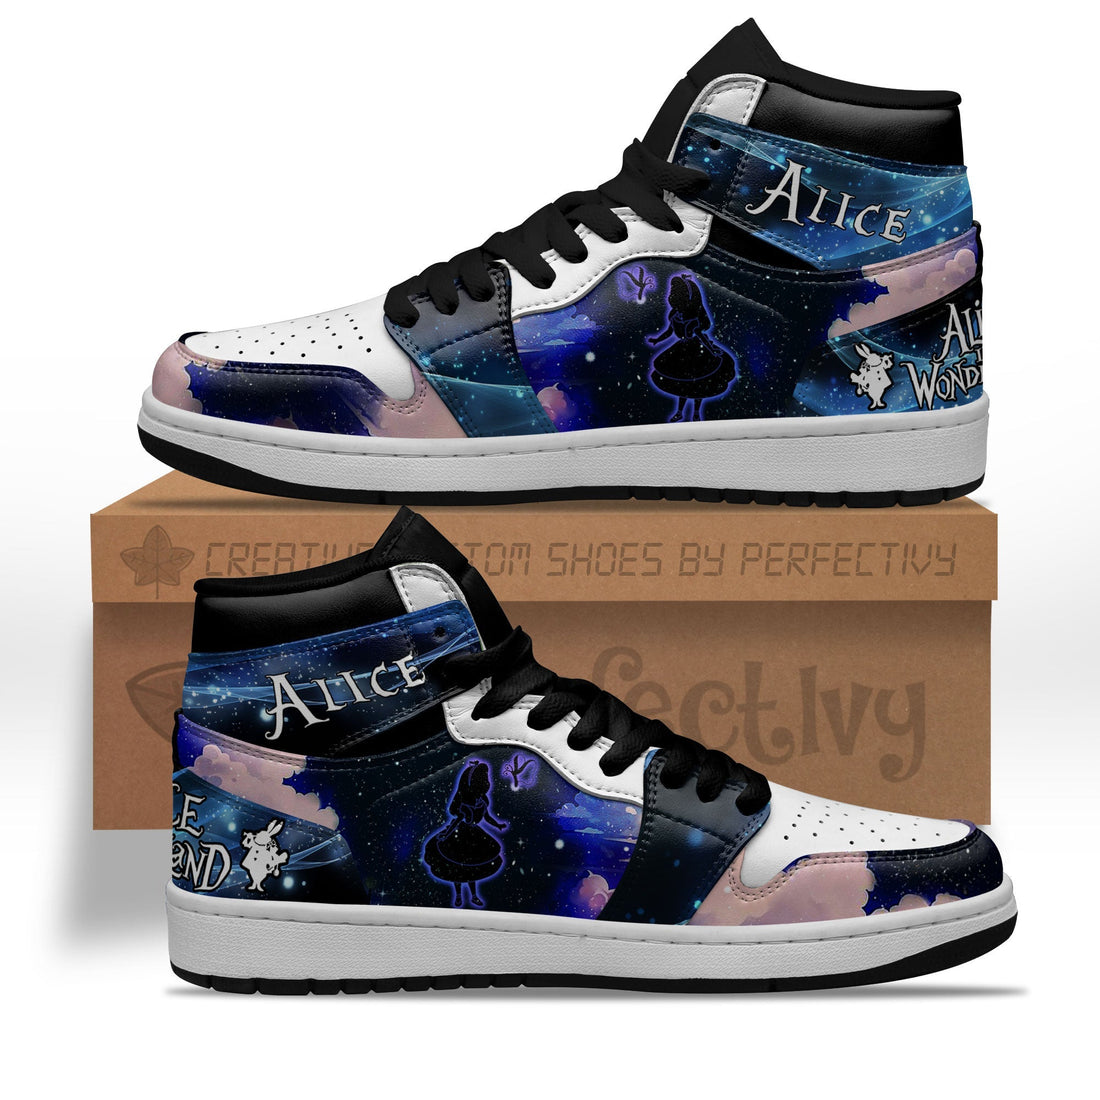 Alice Silhouette J1 Shoes Custom For Fans Sneakers PT10-Gear Wanta